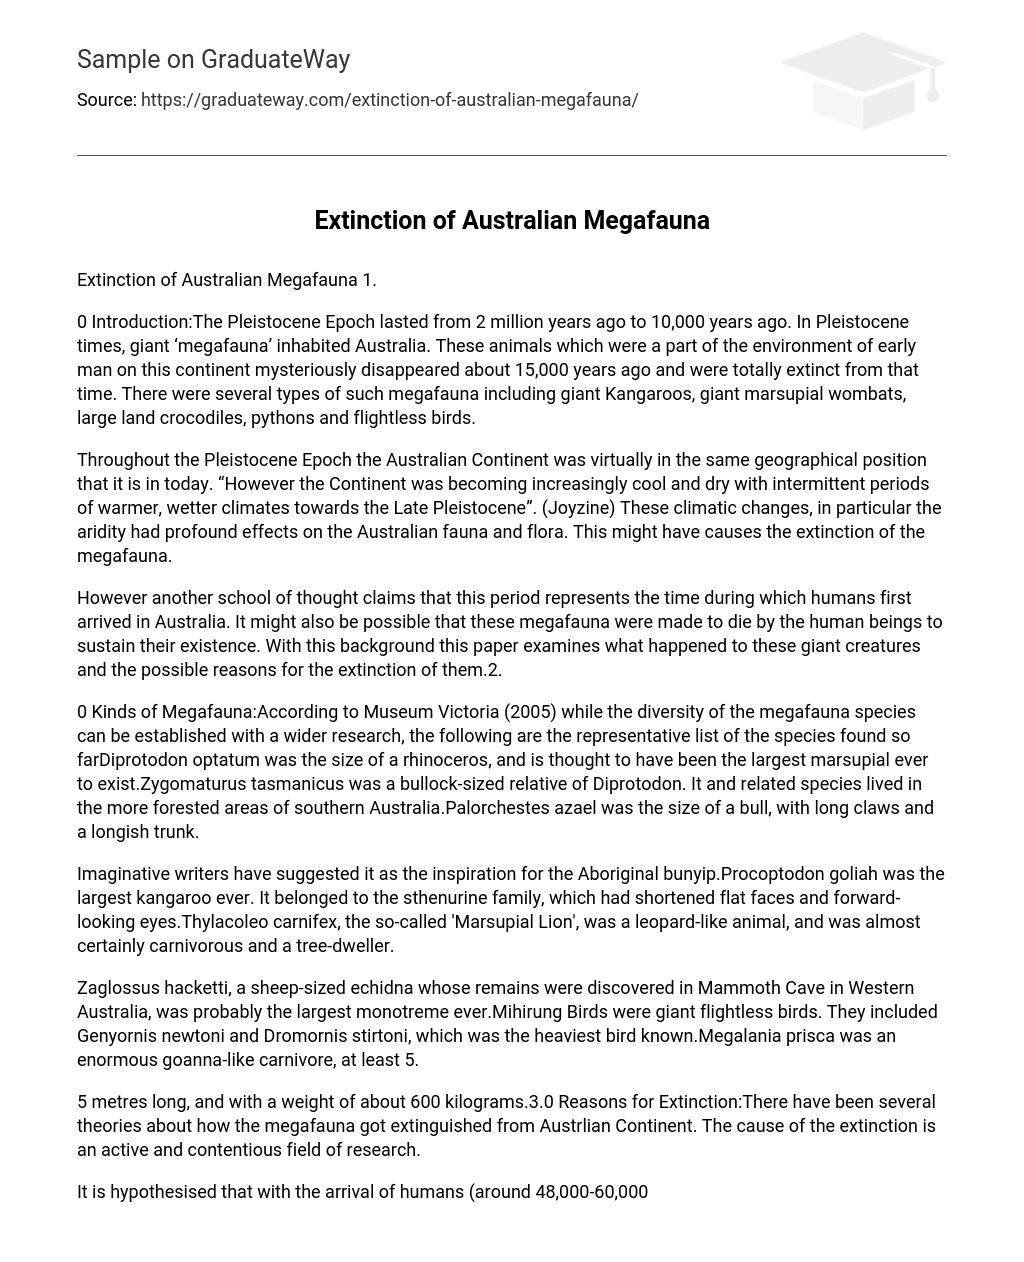 Extinction of Australian Megafauna